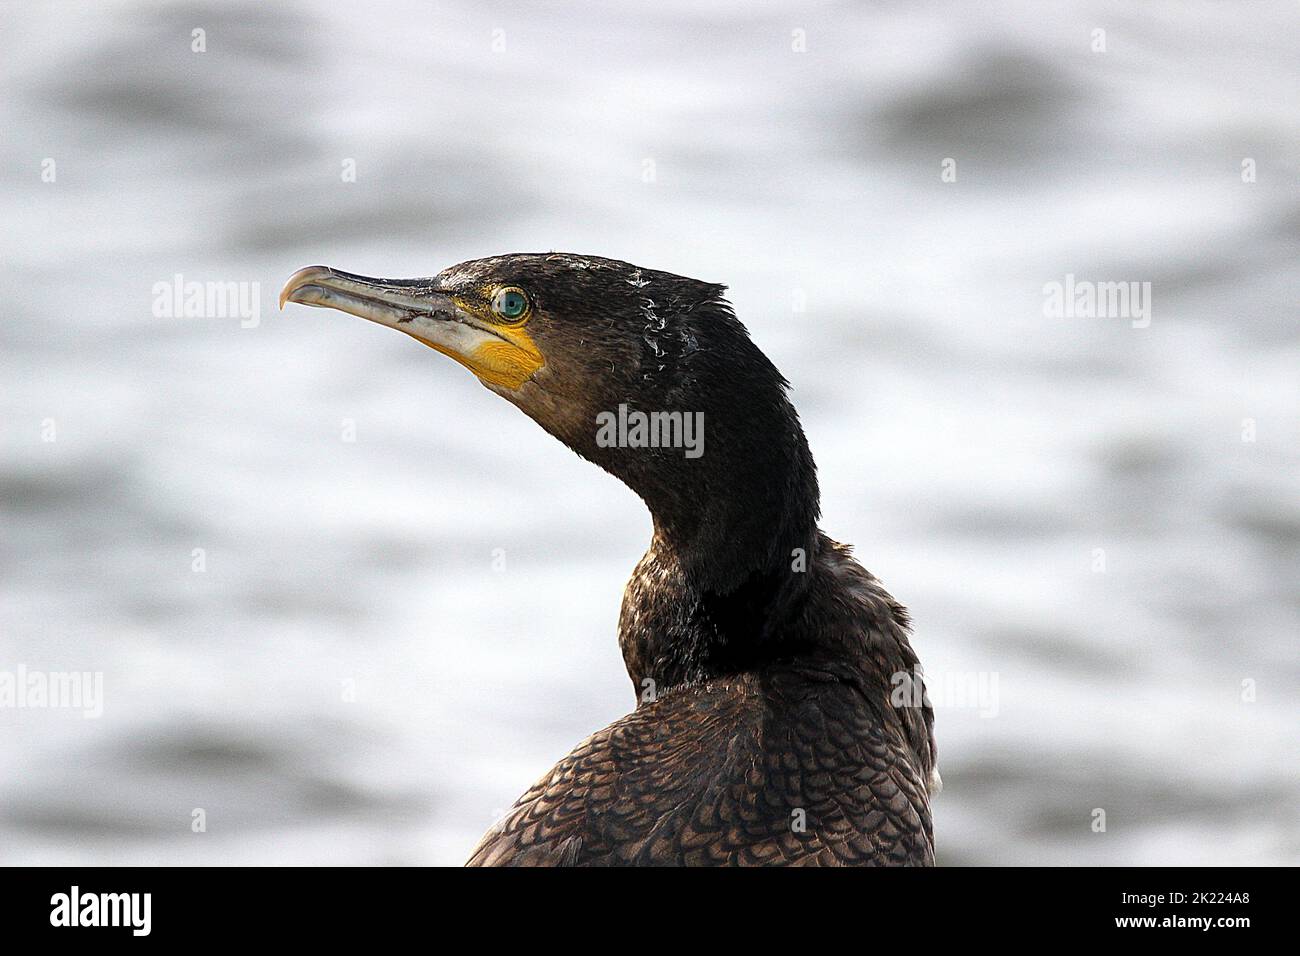 image of great cormorant (Phalacrocorax carbo) head looking left Stock Photo